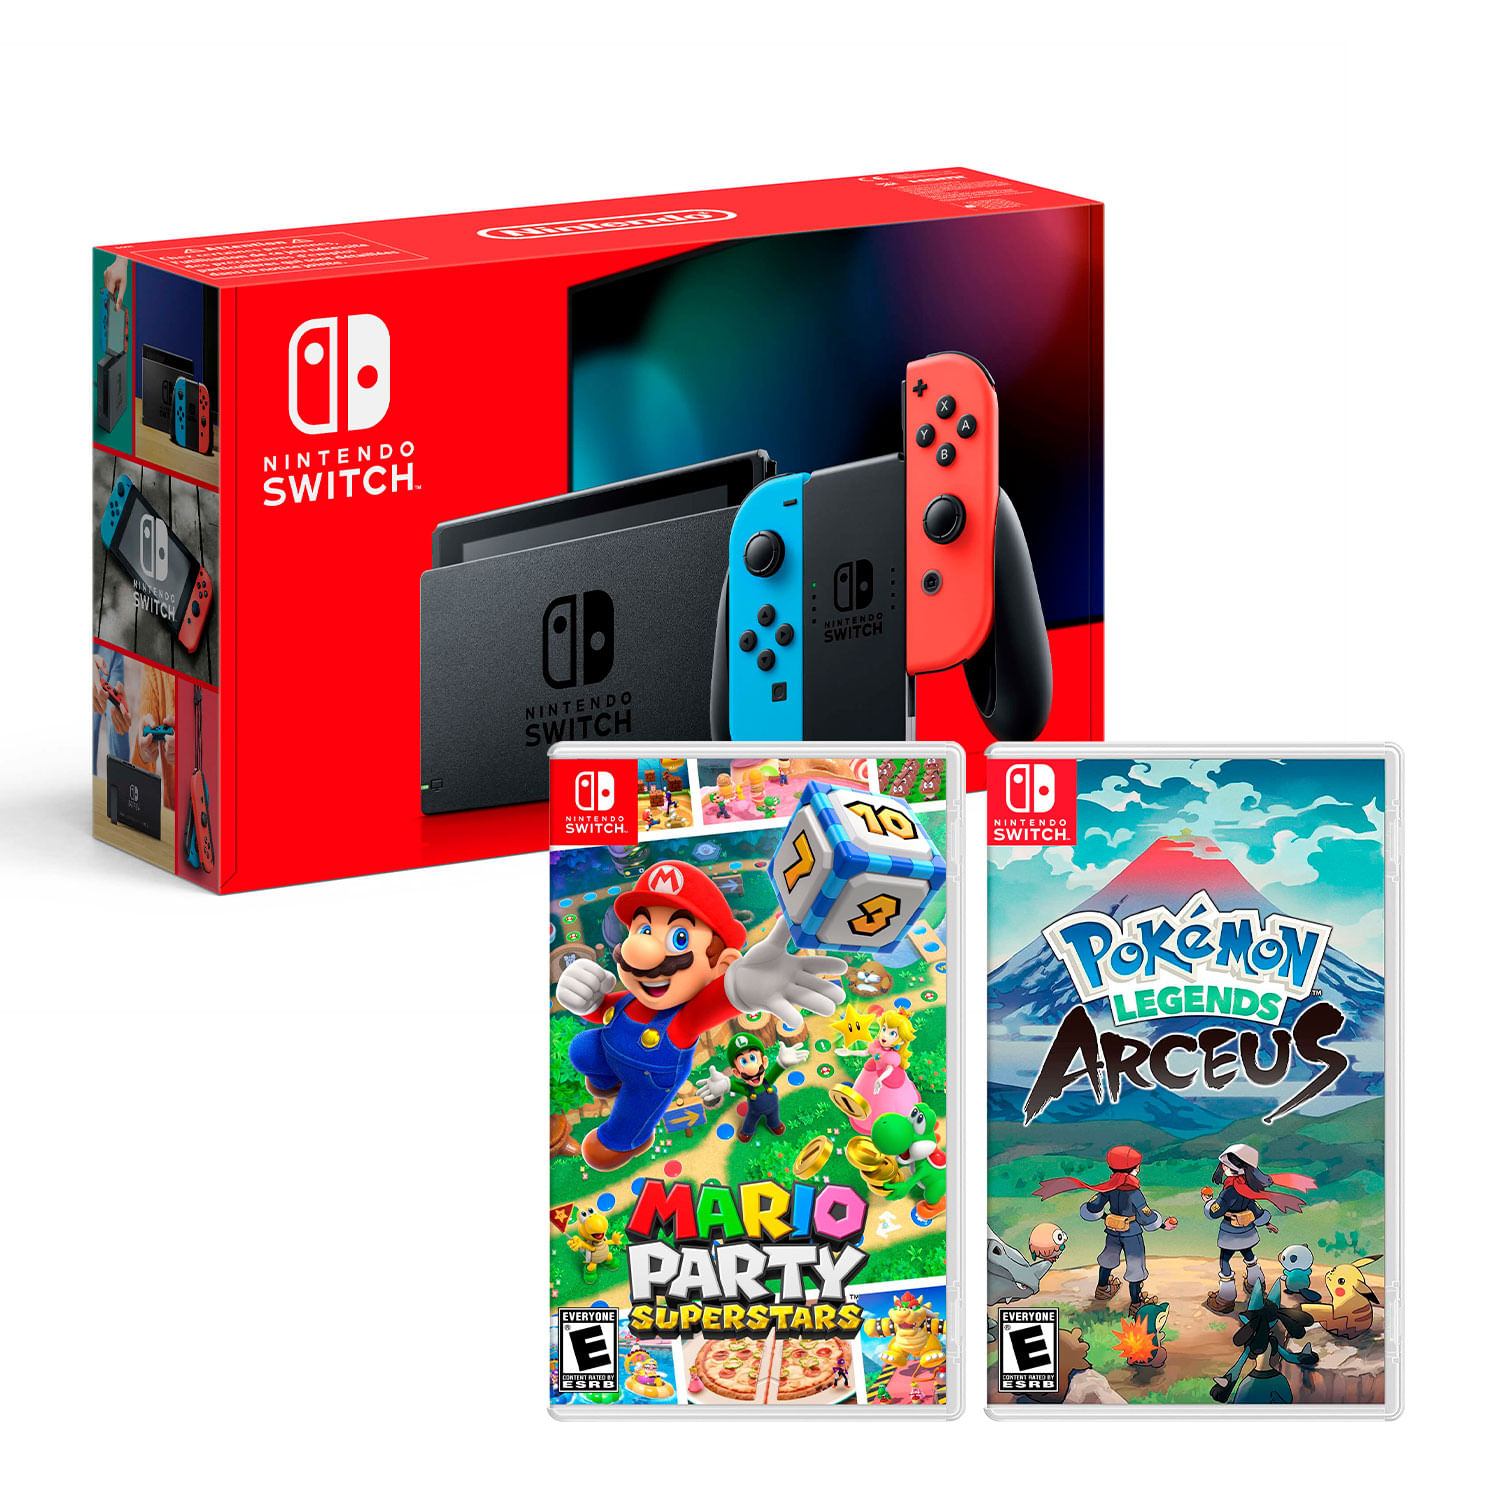 Consola Nintendo Switch Neon 2019 + Mario Party Superstar + Pokémon Legends Arceus